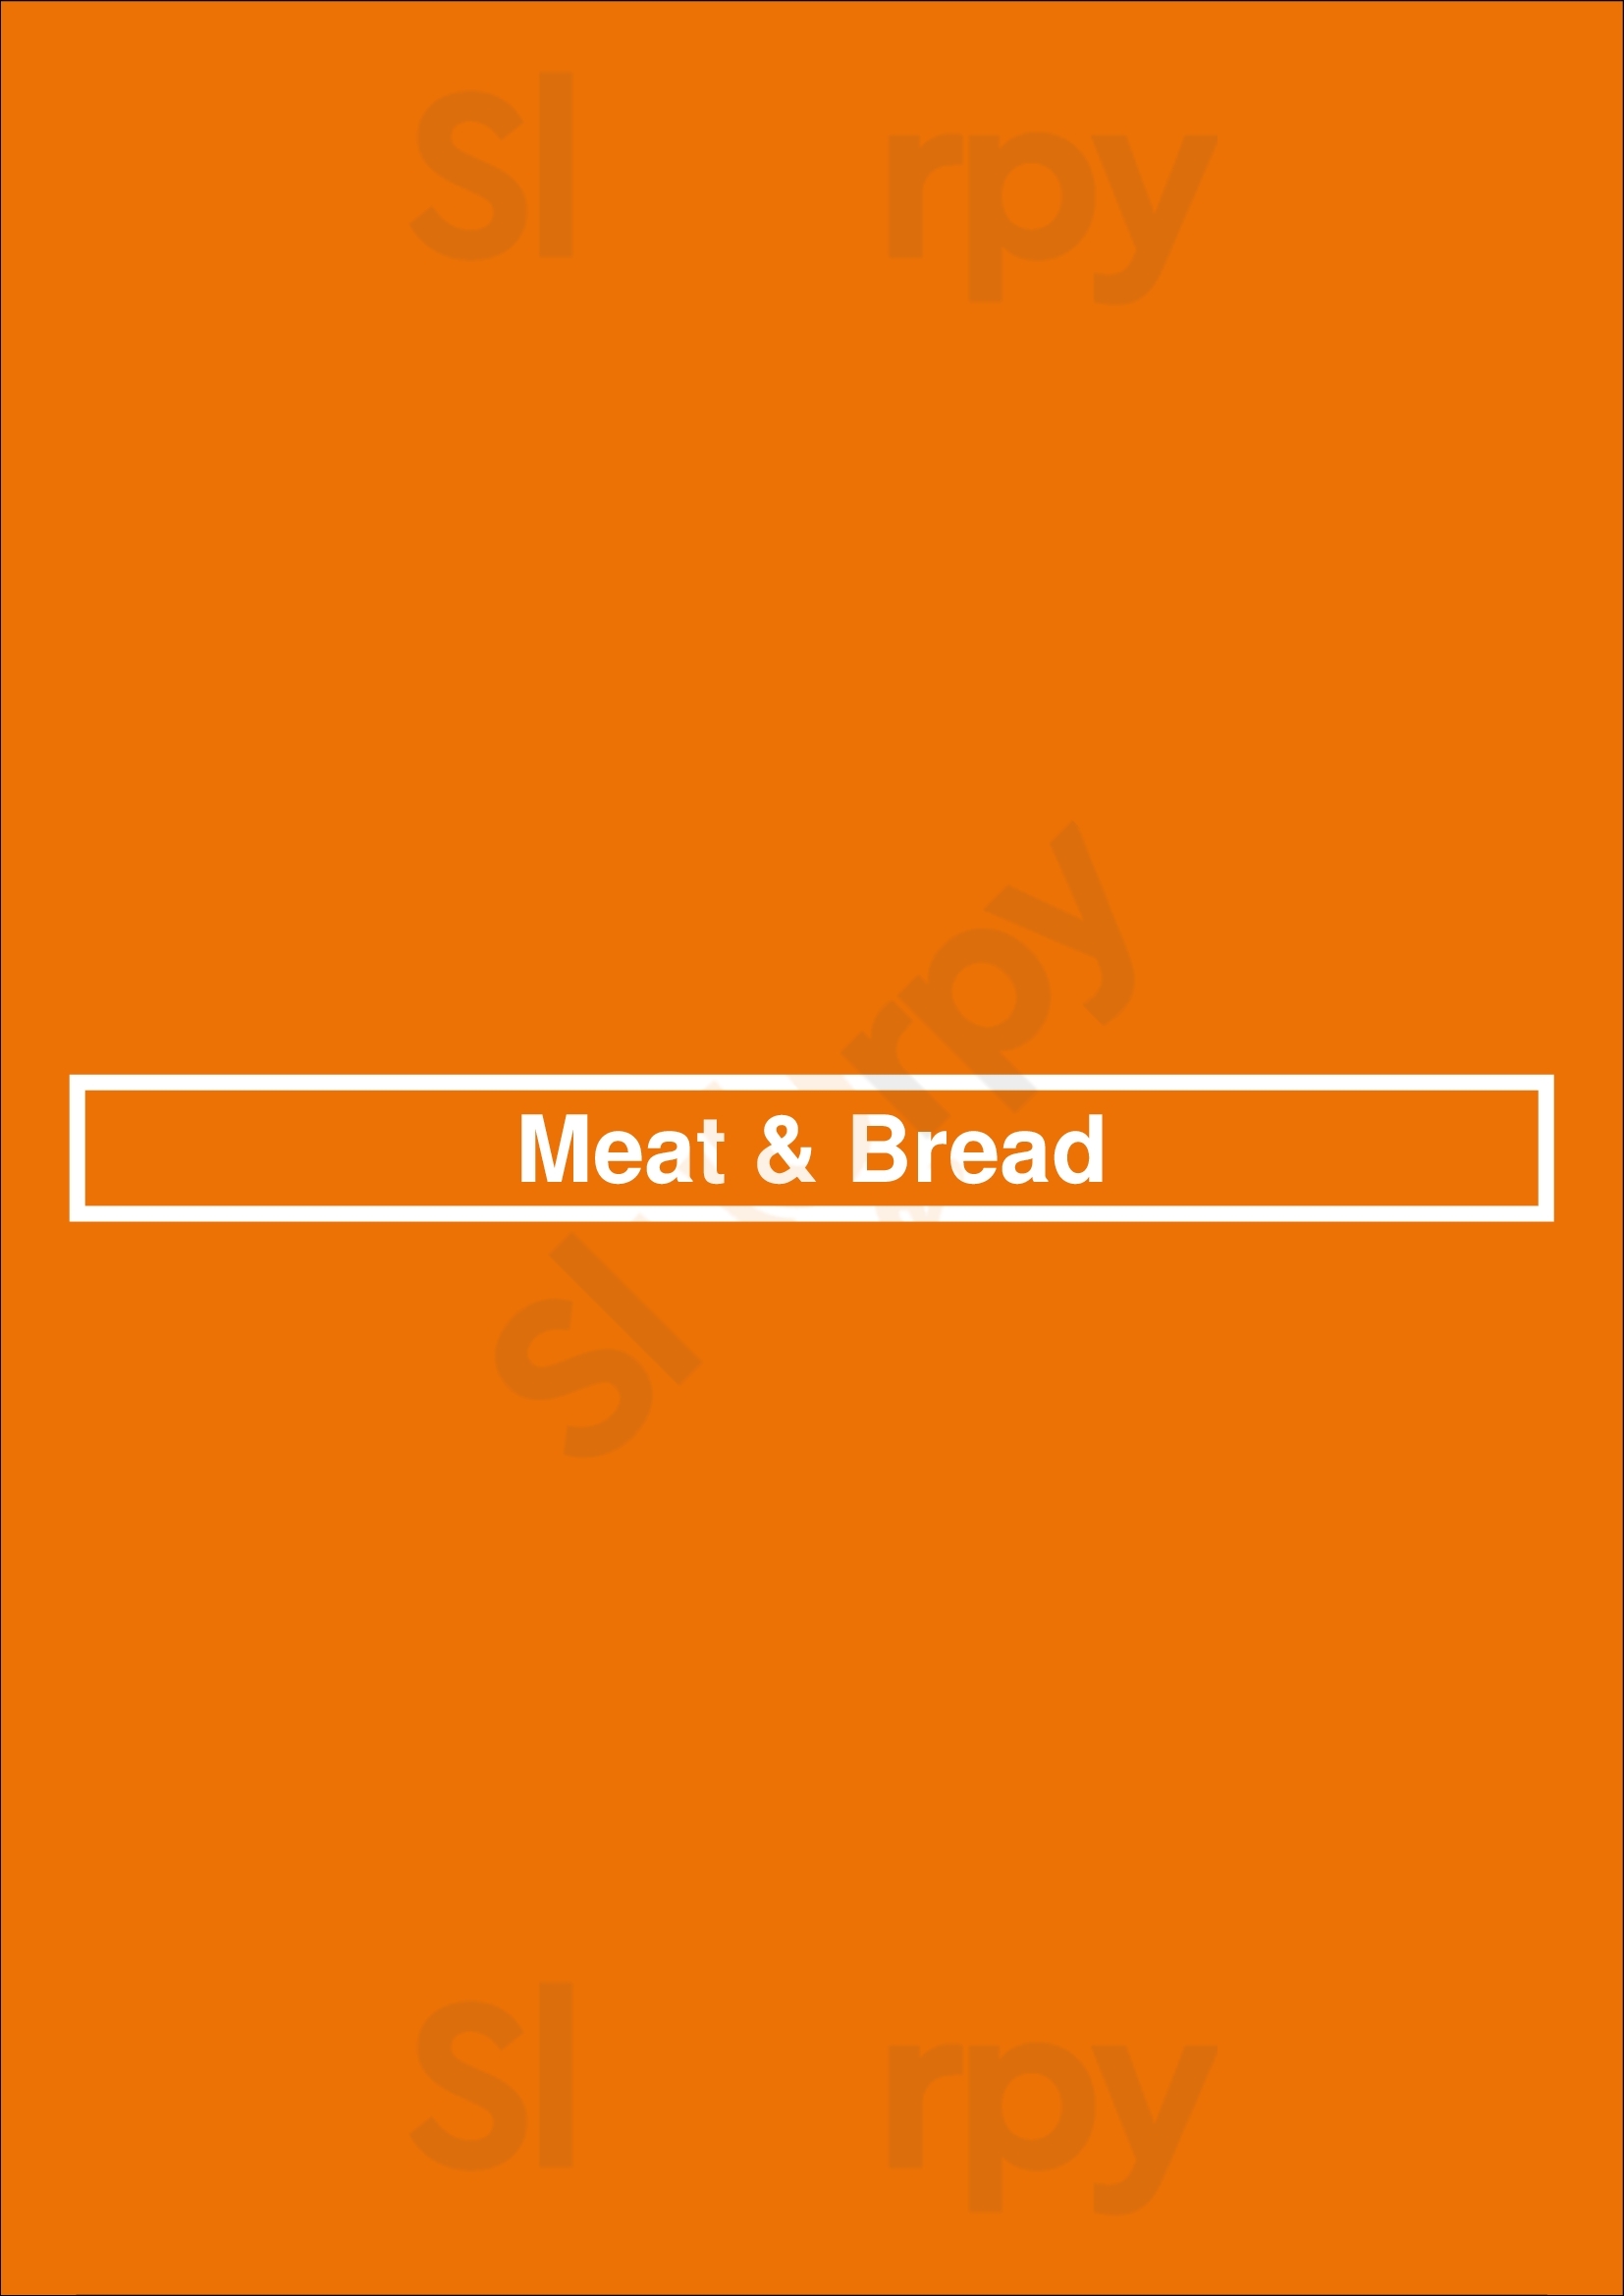 Meat & Bread Vancouver Menu - 1